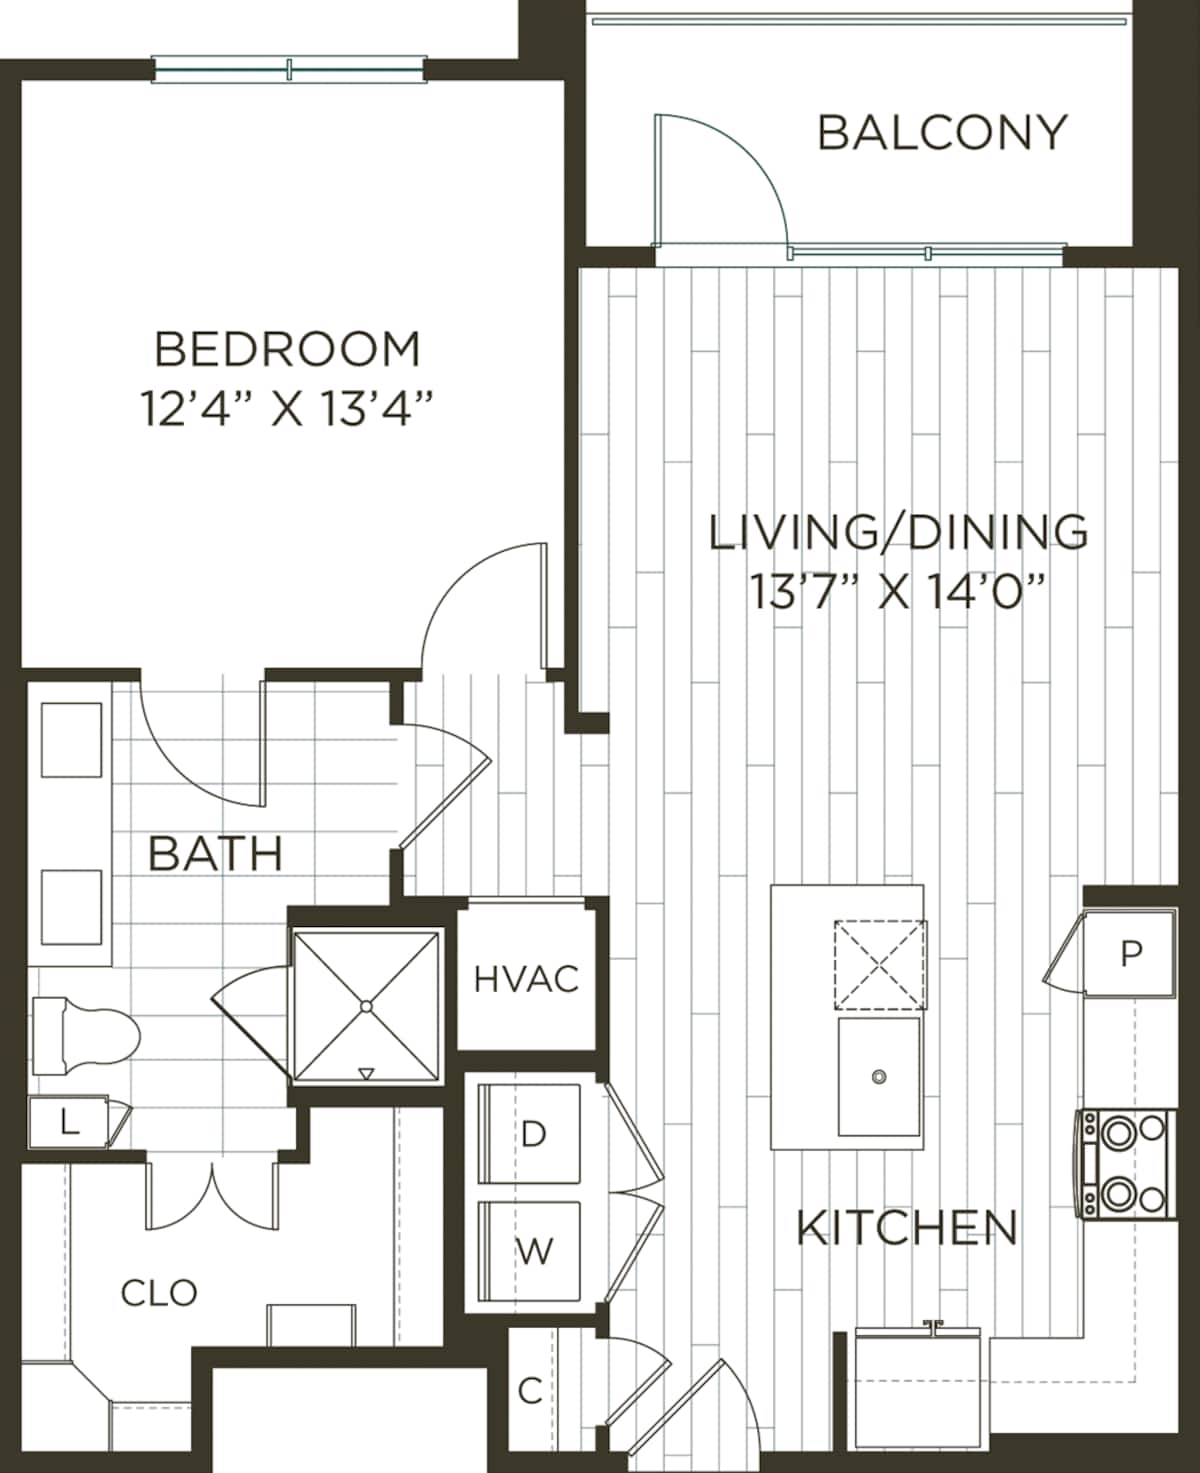 Floorplan diagram for A5.1, showing 1 bedroom